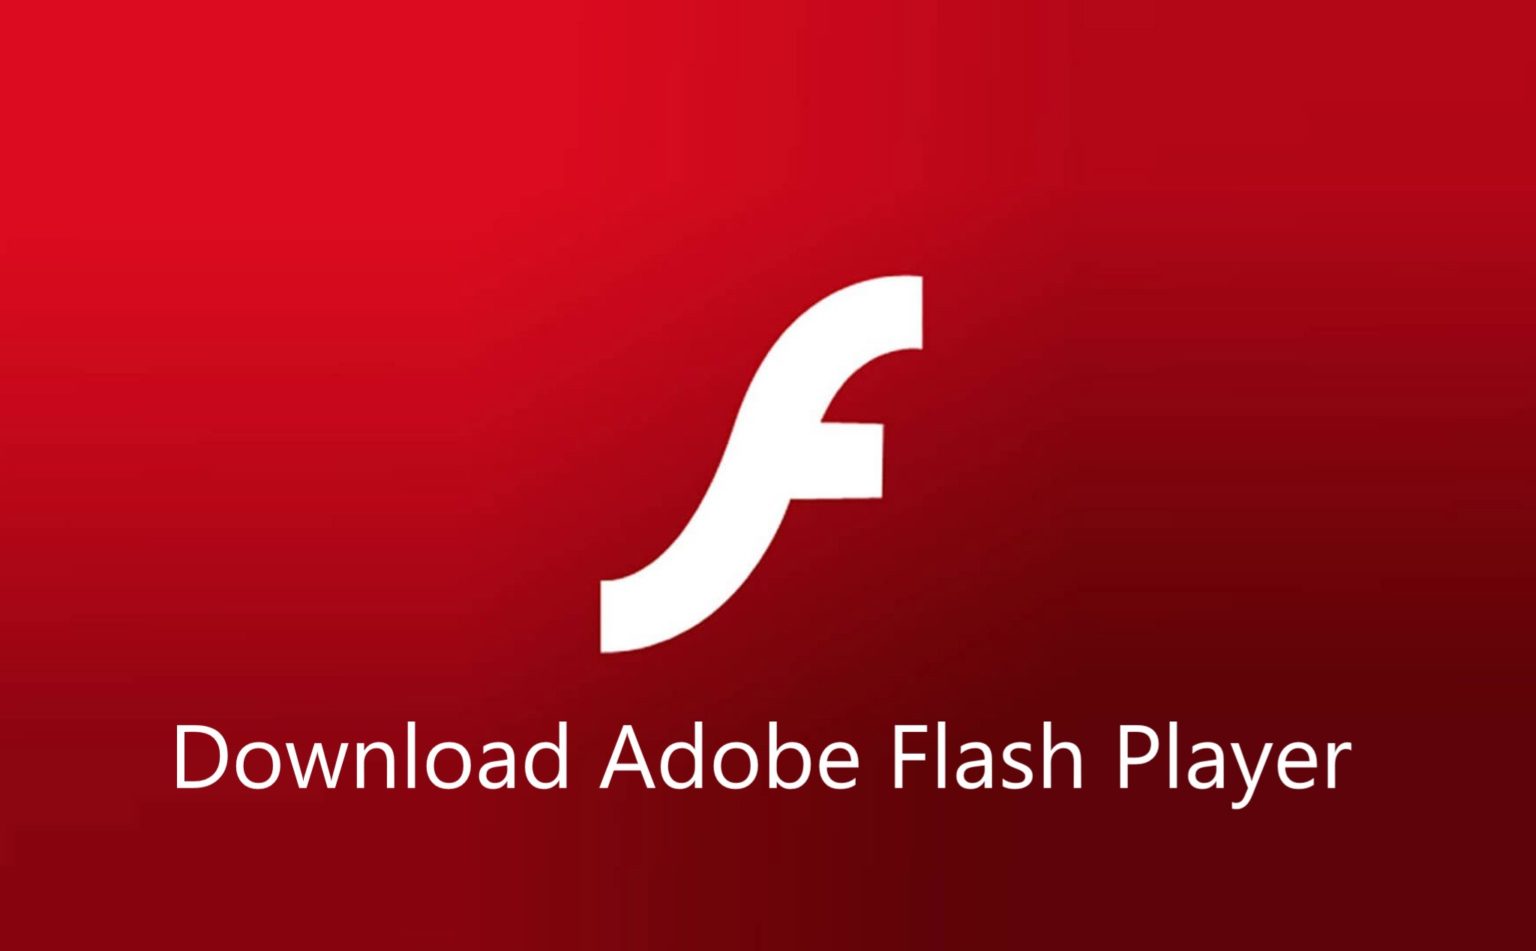 adobe flash player free download windows 10 64 bit greek